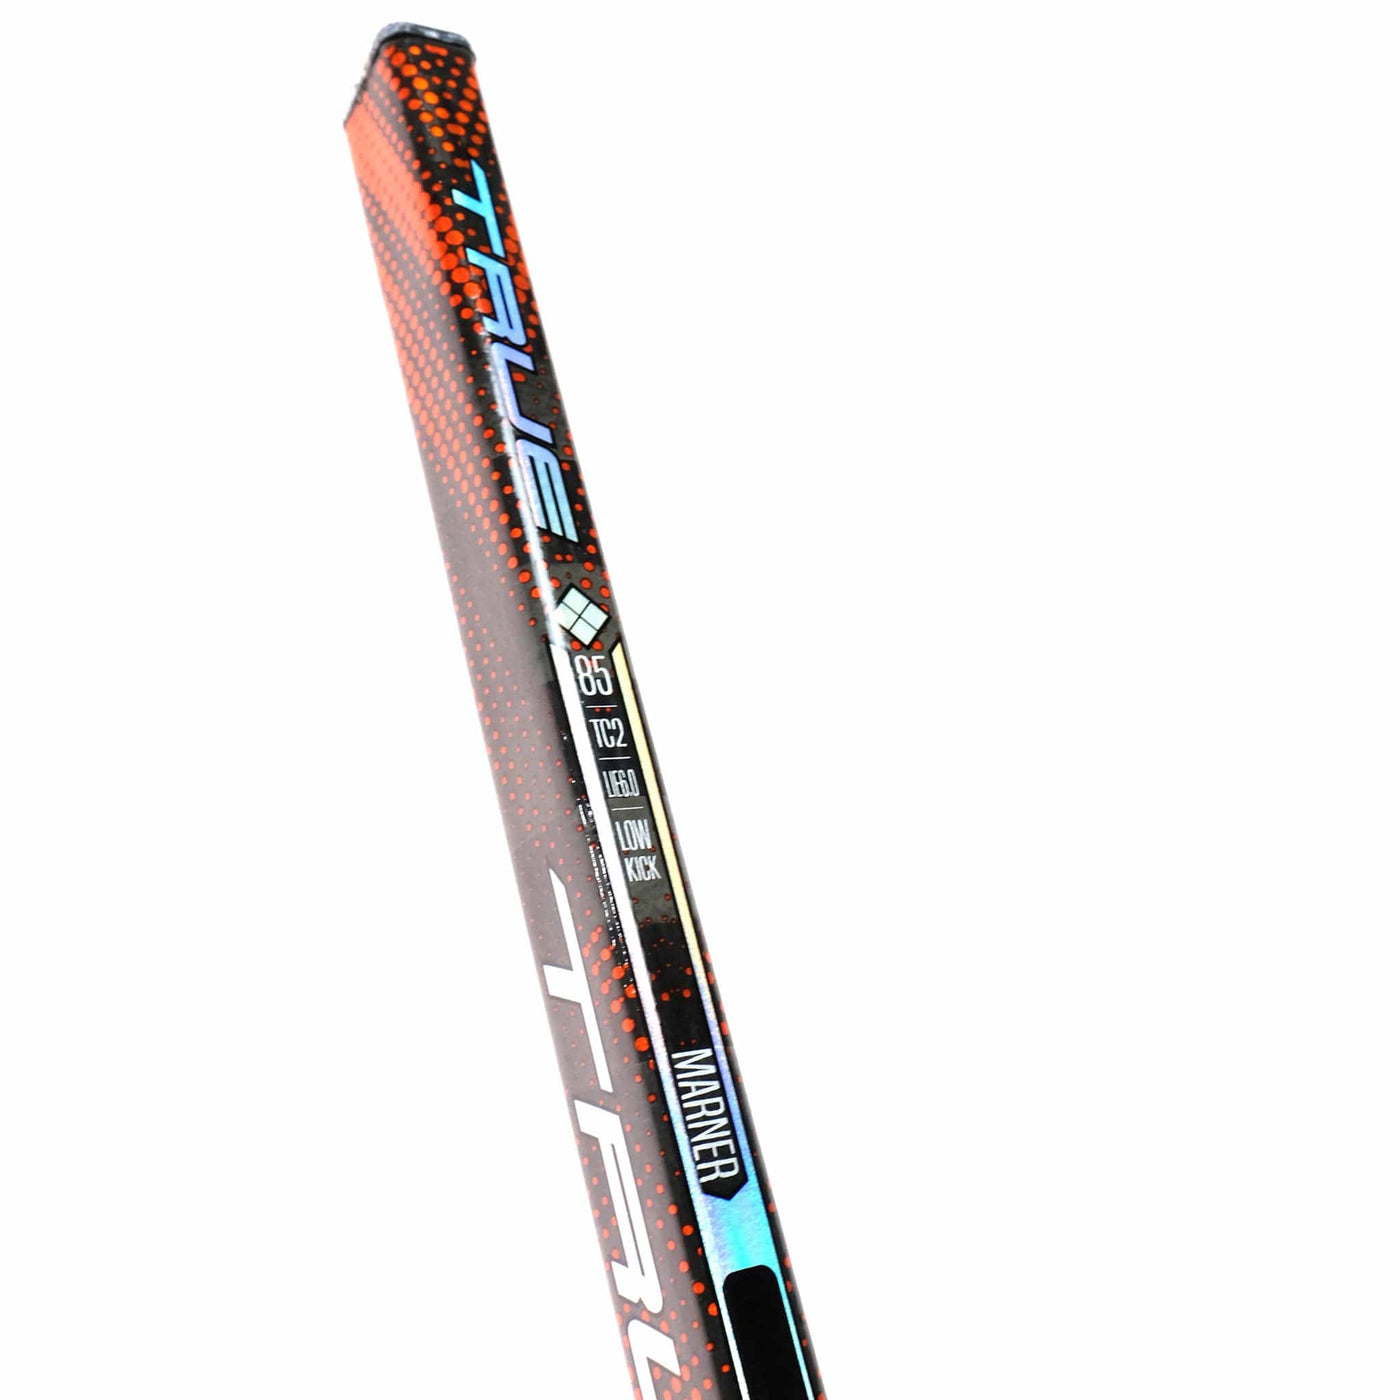 TRUE HZRDUS 9X Senior Hockey Stick - The Hockey Shop Source For Sports